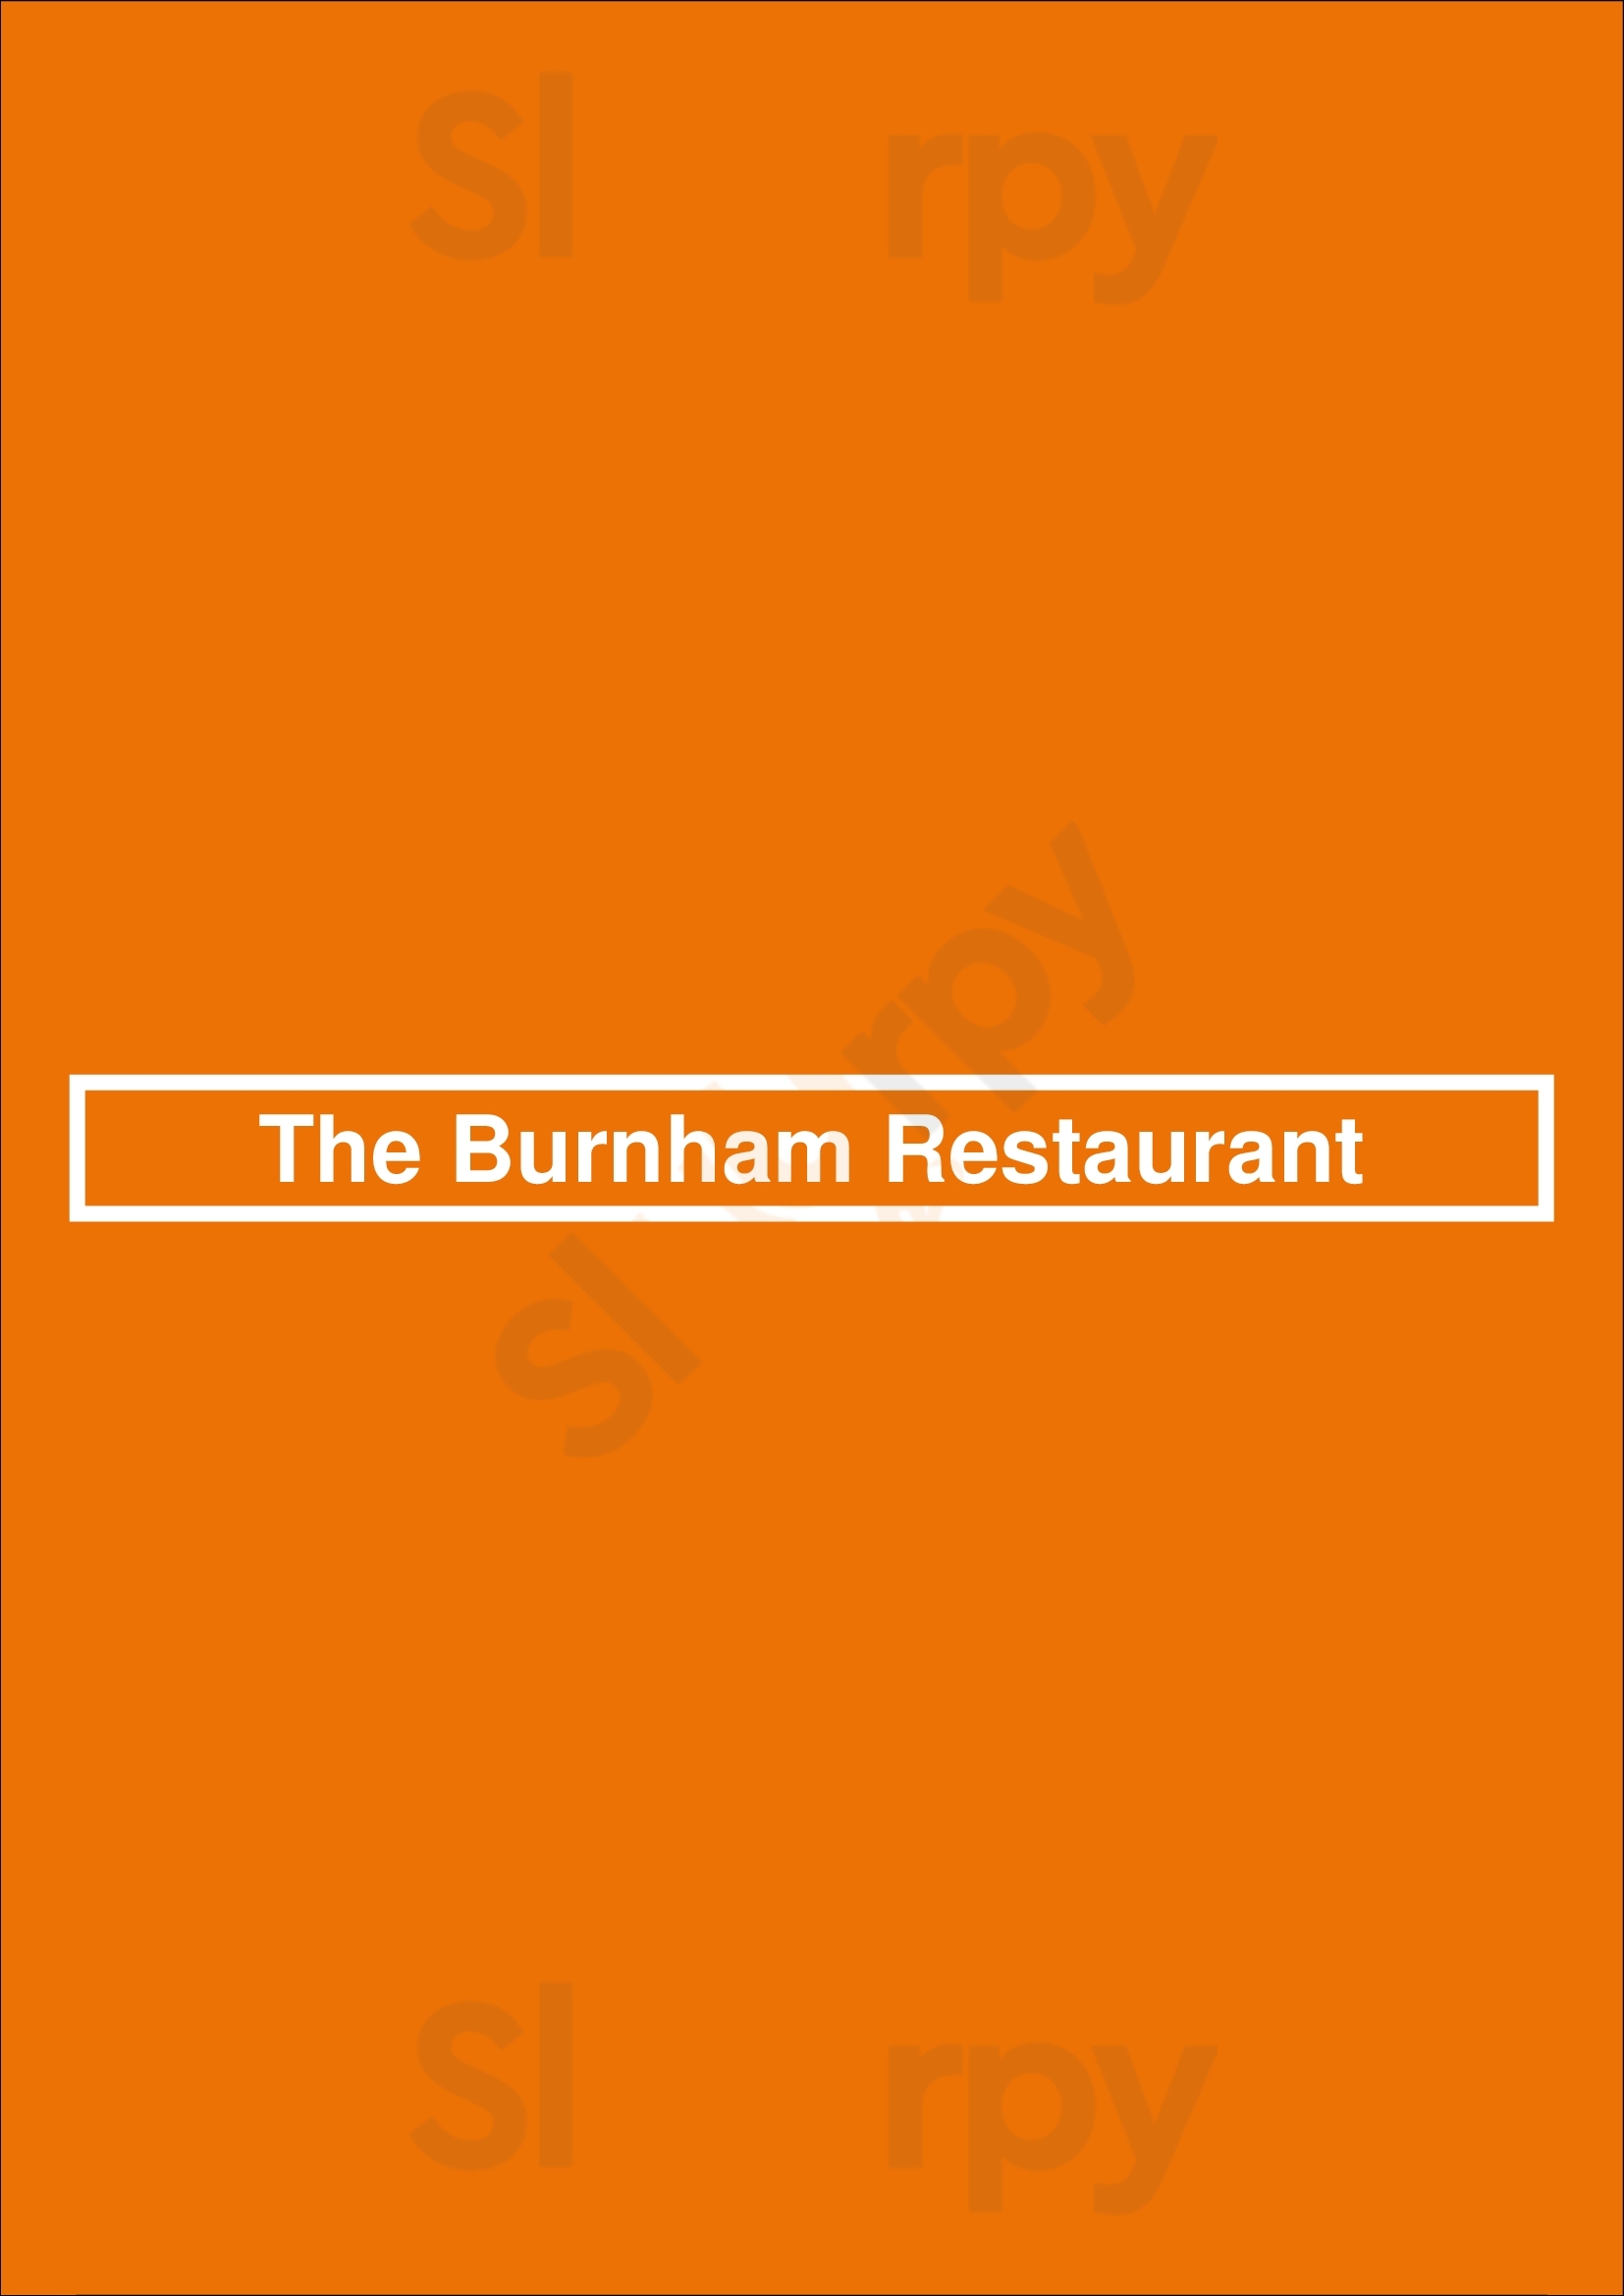 The Burnham Restaurant Cleveland Menu - 1